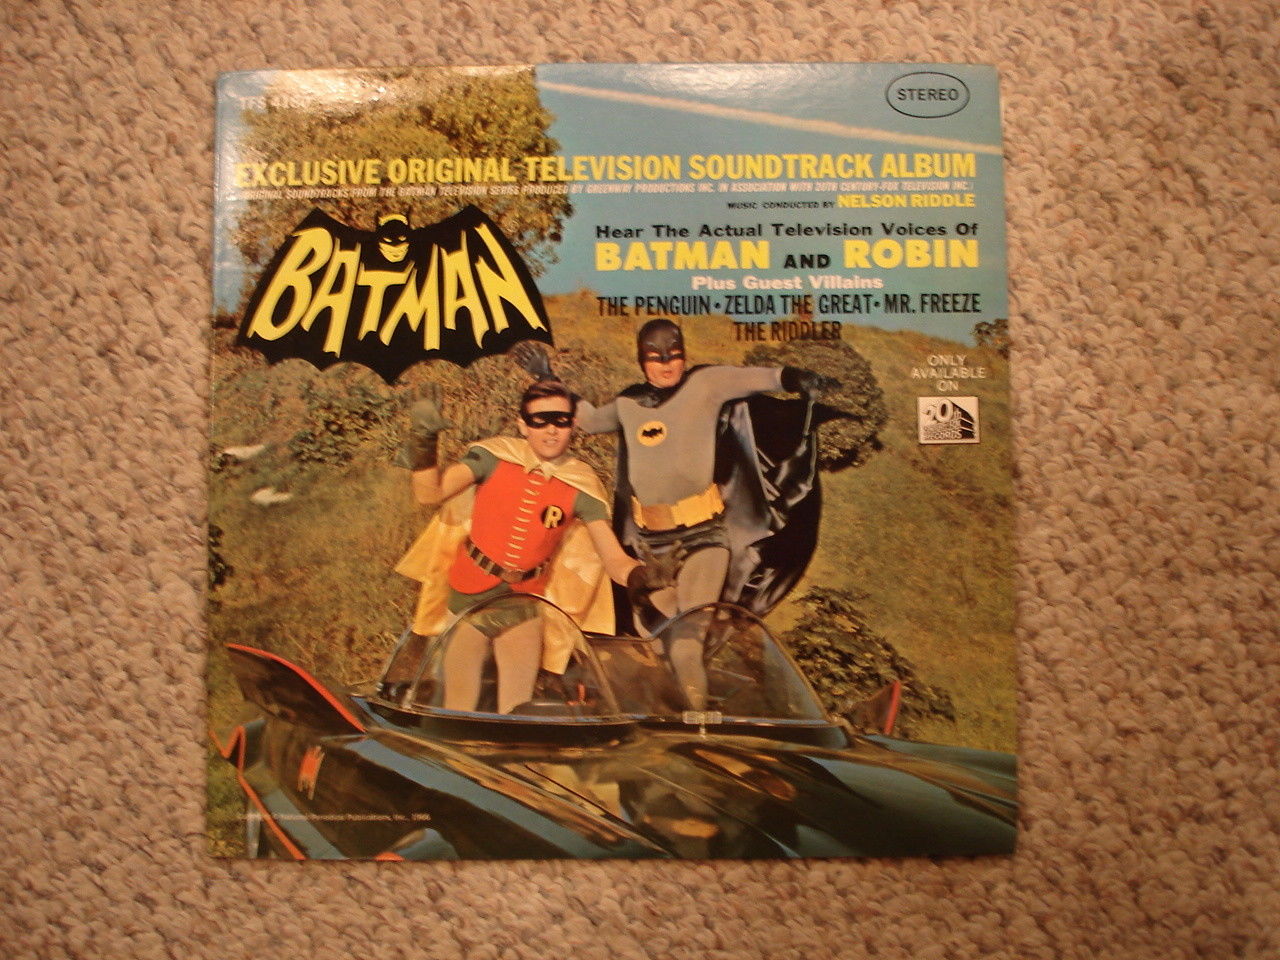 Batman Original Television Soundtrack 20TH Century Fox TFS 4180 1966 like new